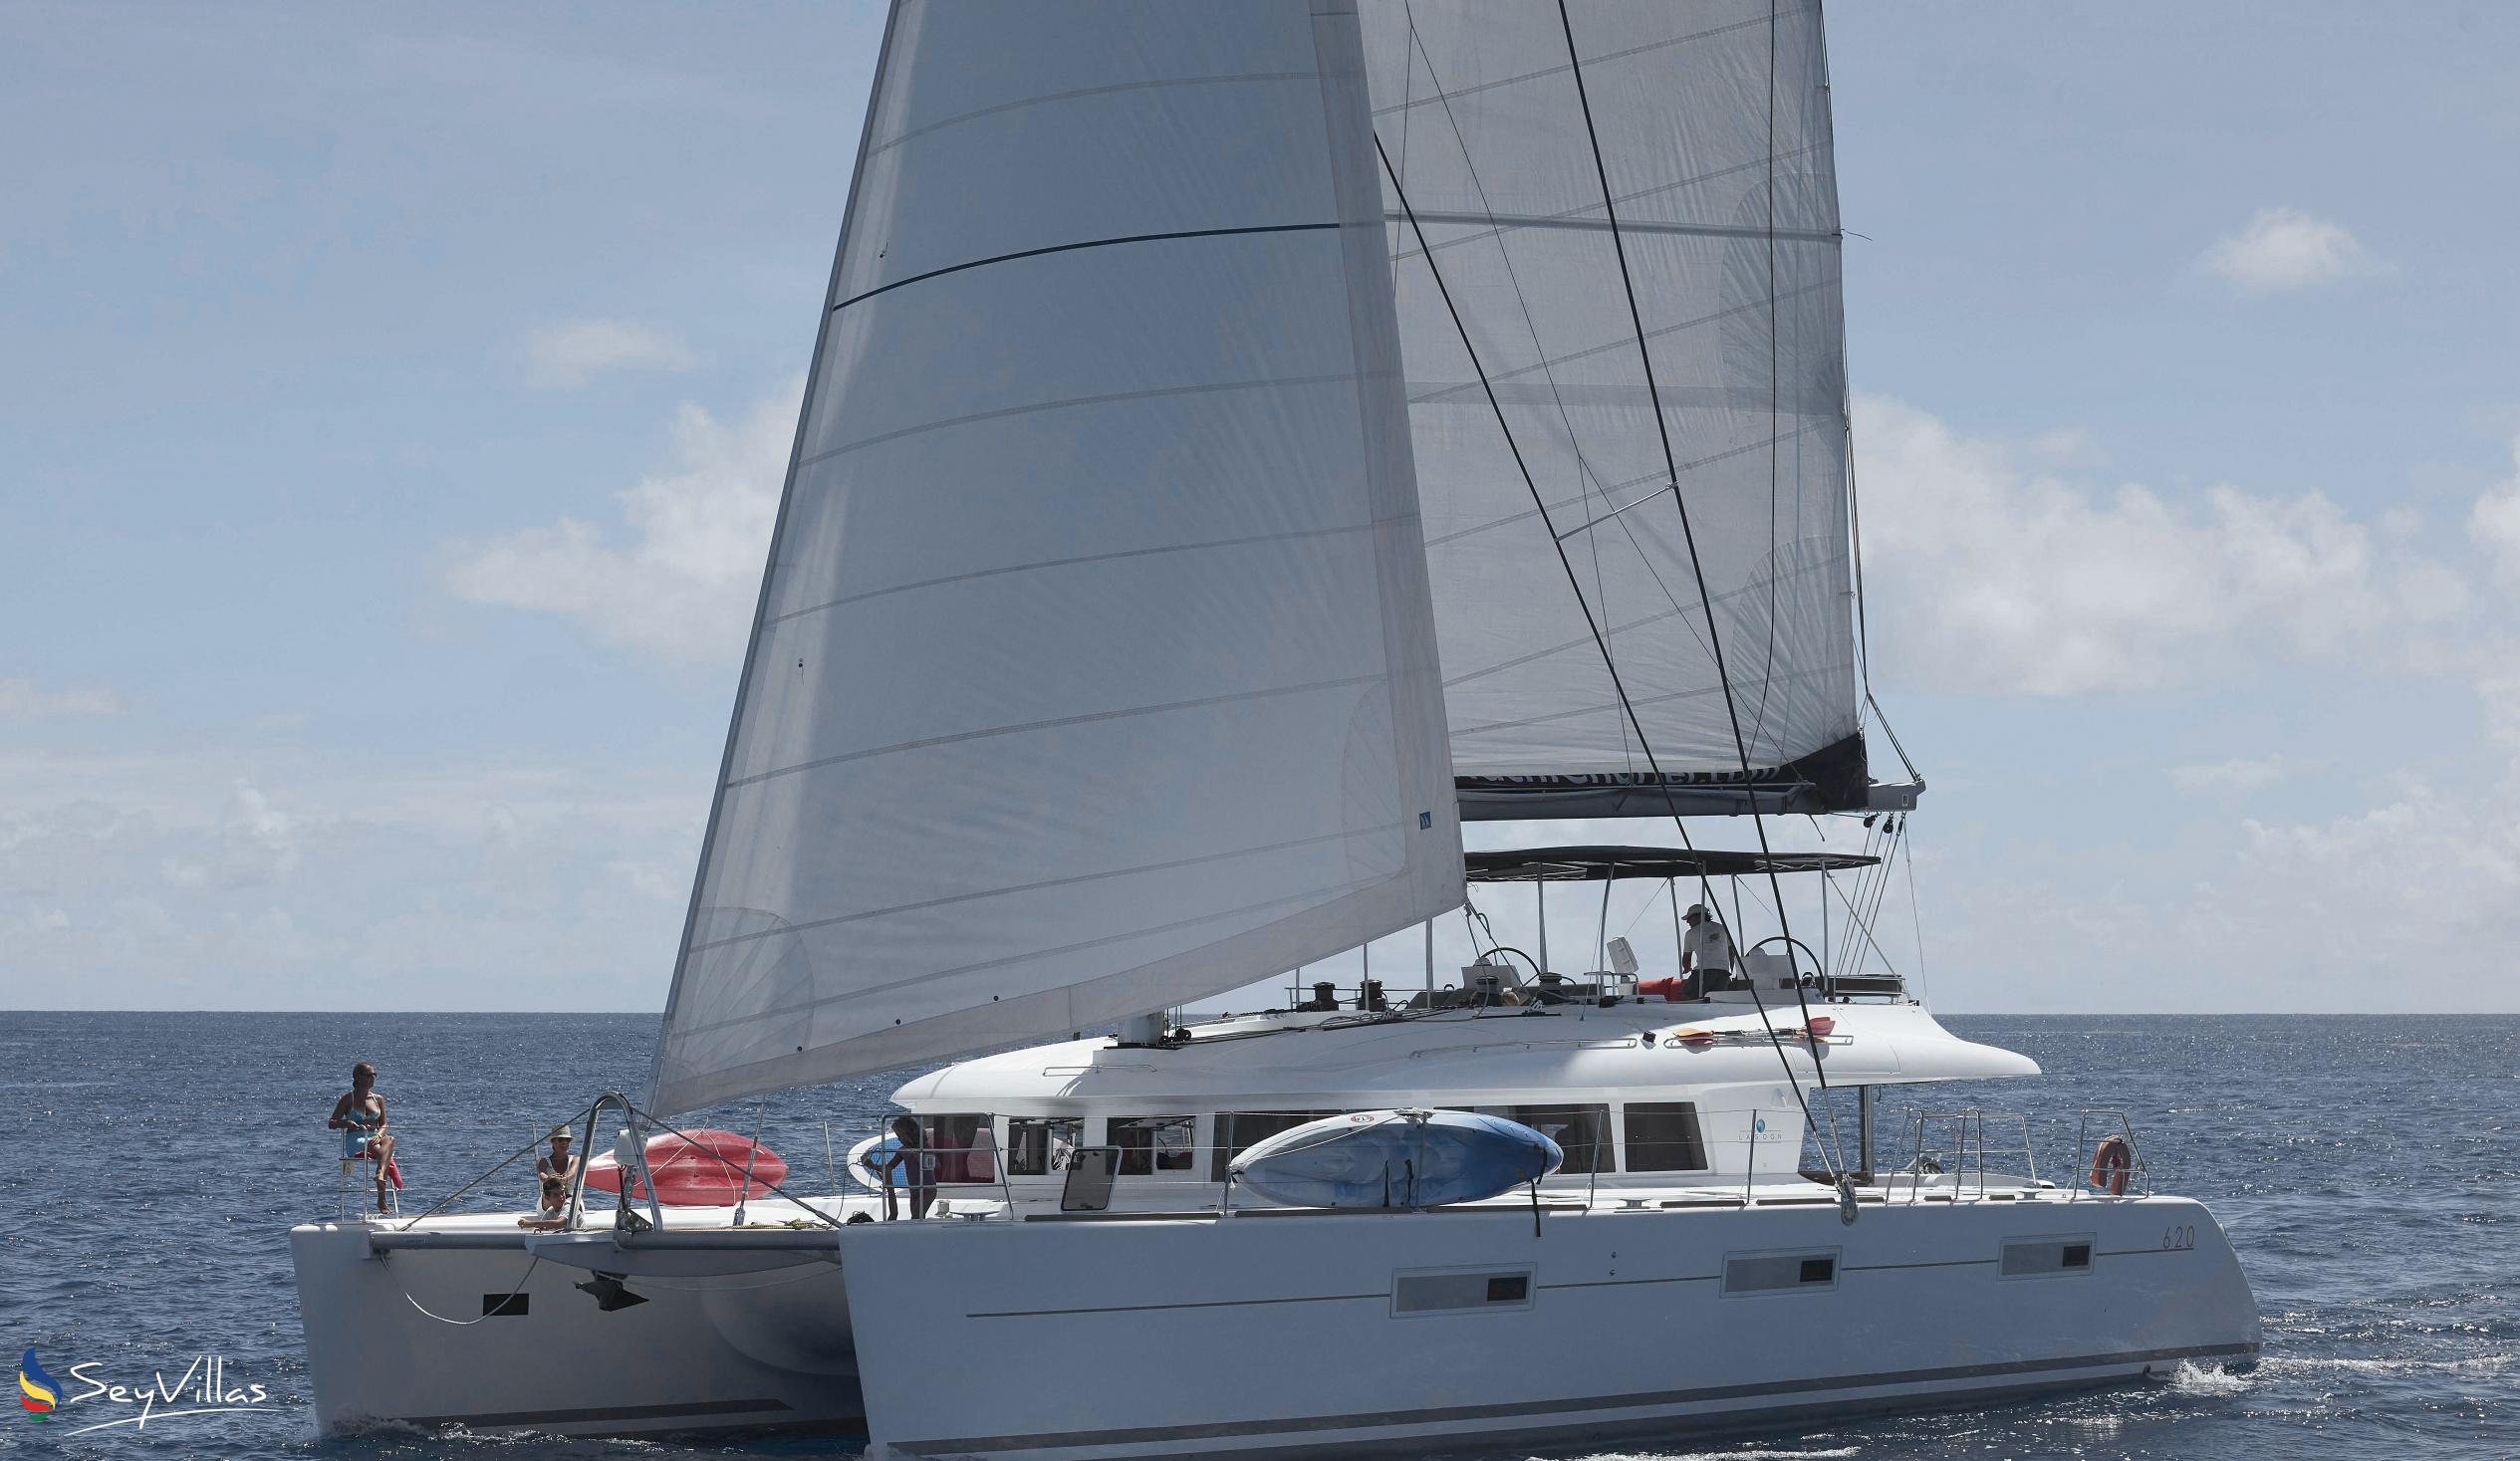 Foto 3: Dream Yacht Silhouette Dream Premium - Esterno - Seychelles (Seychelles)